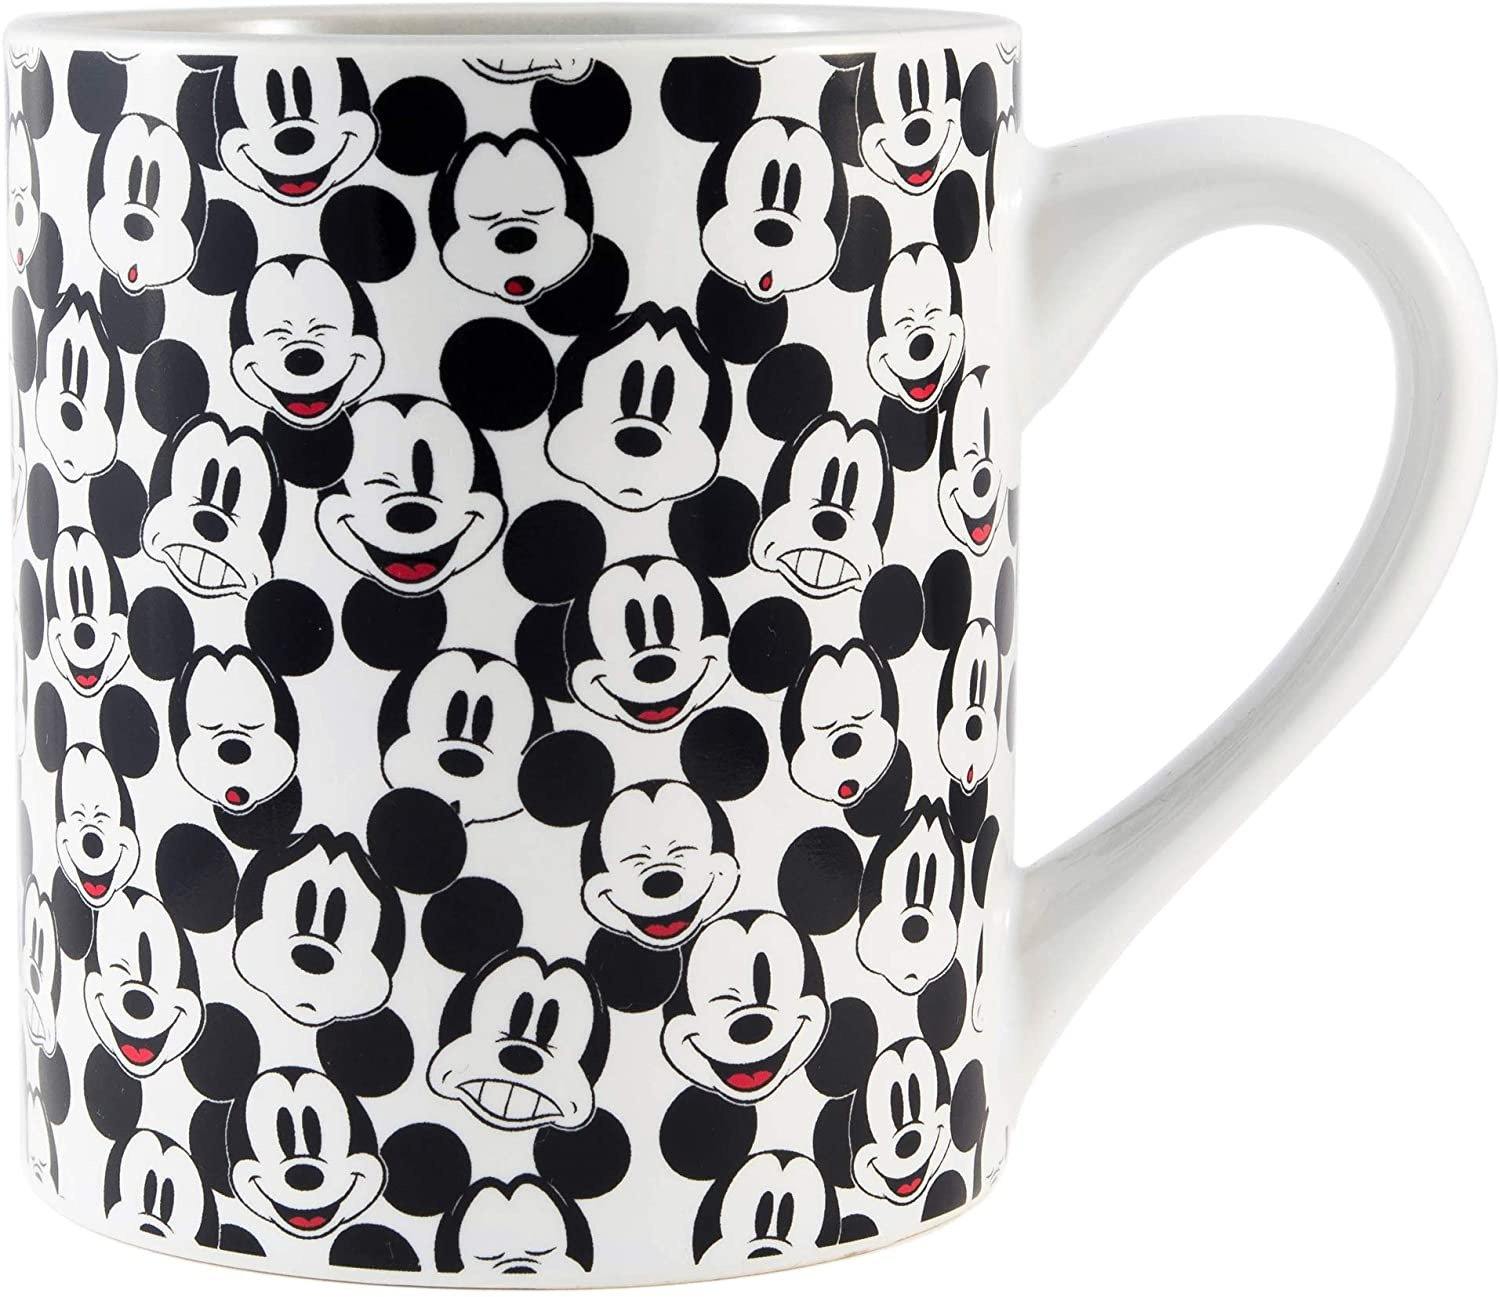 Disney Mickey Mouse Face Pattern 14oz Ceramic Mug